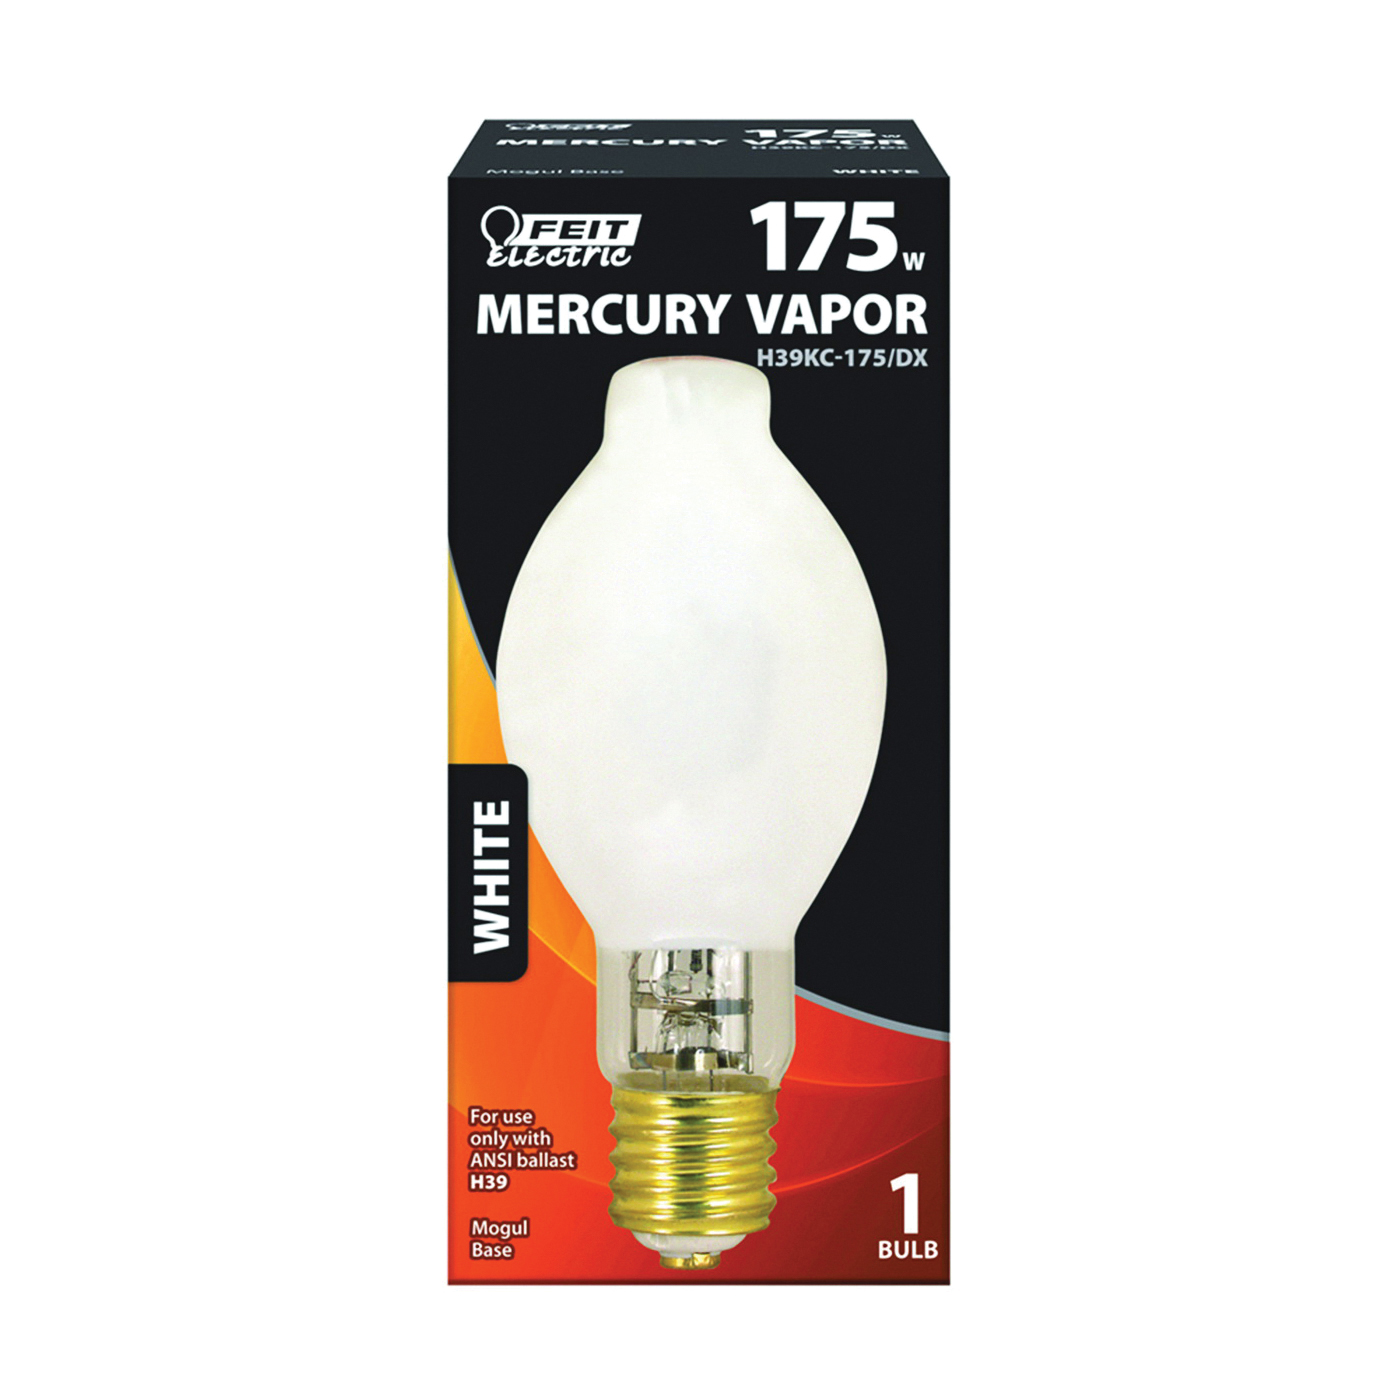 H39KC-175/DX Mercury Vapor Bulb, 175 W, BT28 Blown Tubular Lamp, Mogul E39 Lamp Base, 7350 Lumens